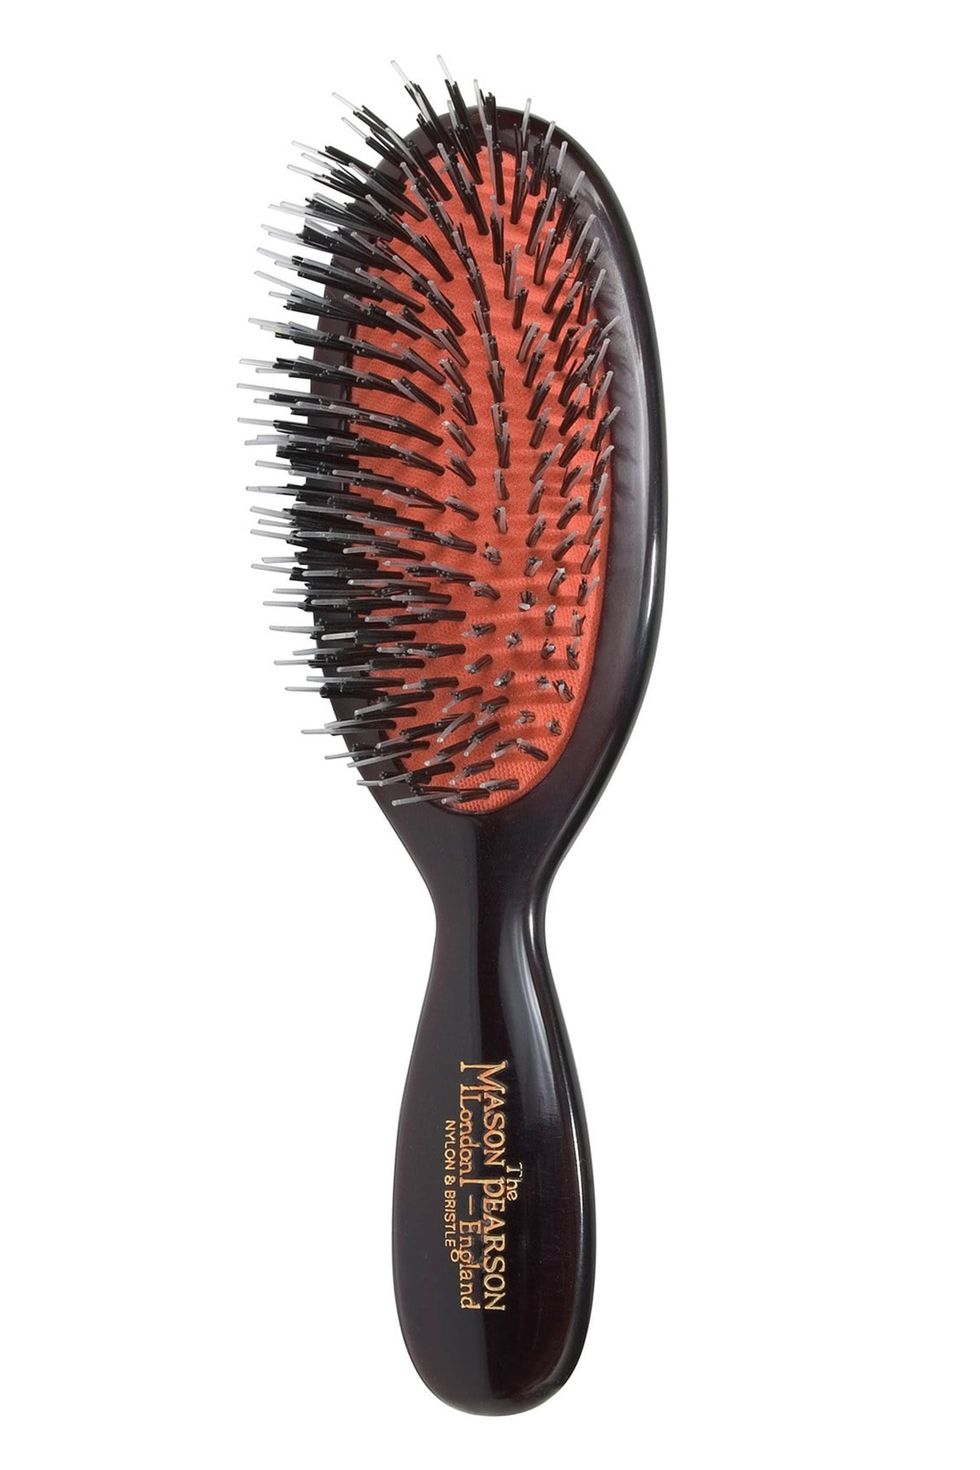 Junior Medium Mixed Bristle Hairbrush